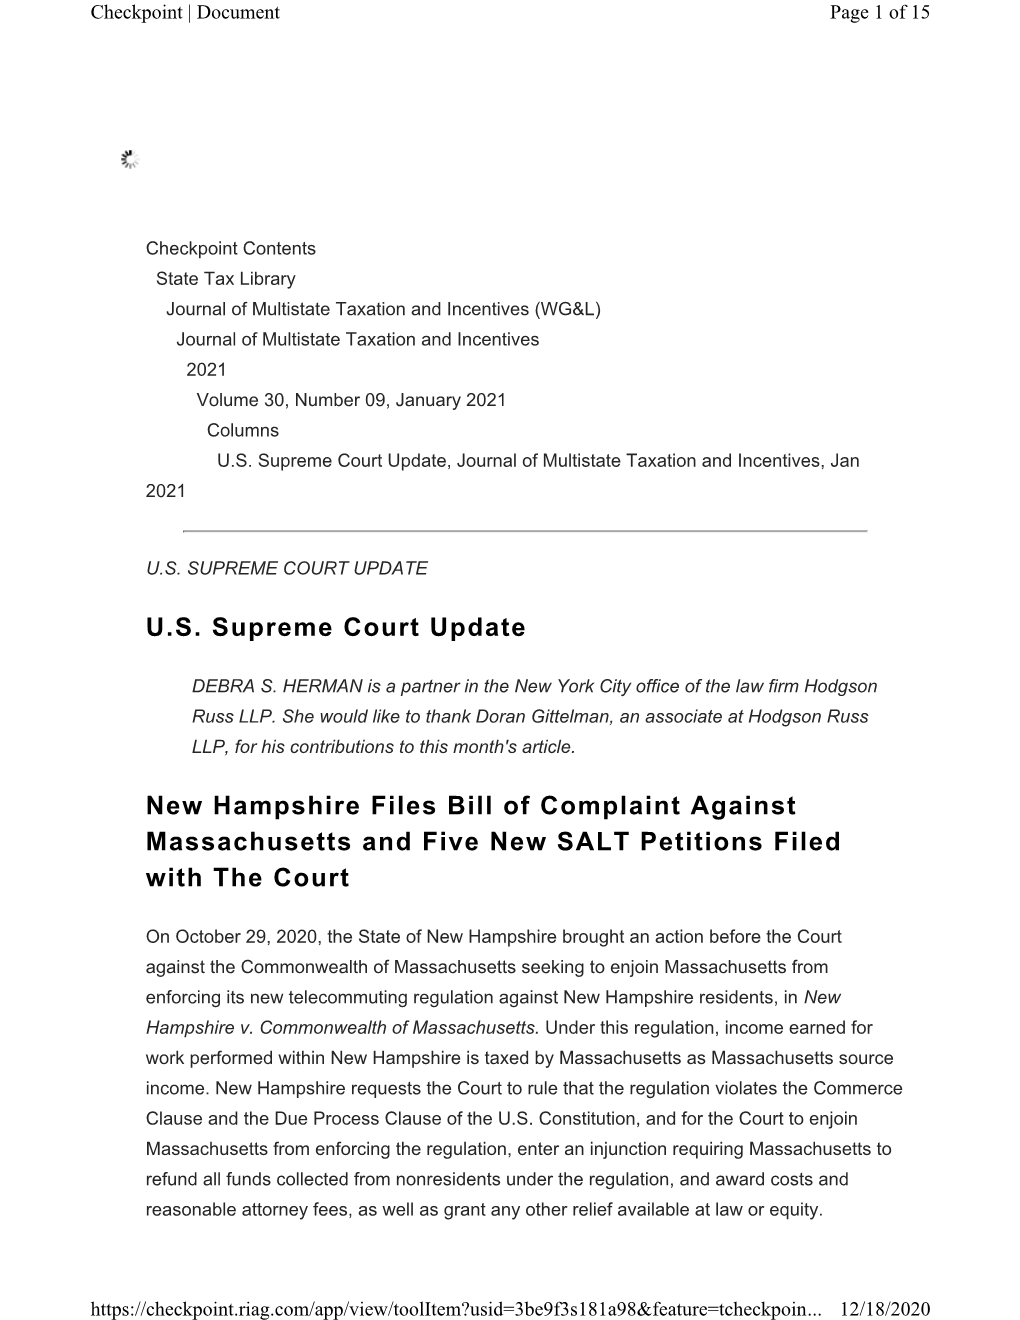 U.S. Supreme Court Update New Hampshire Files Bill of Complaint